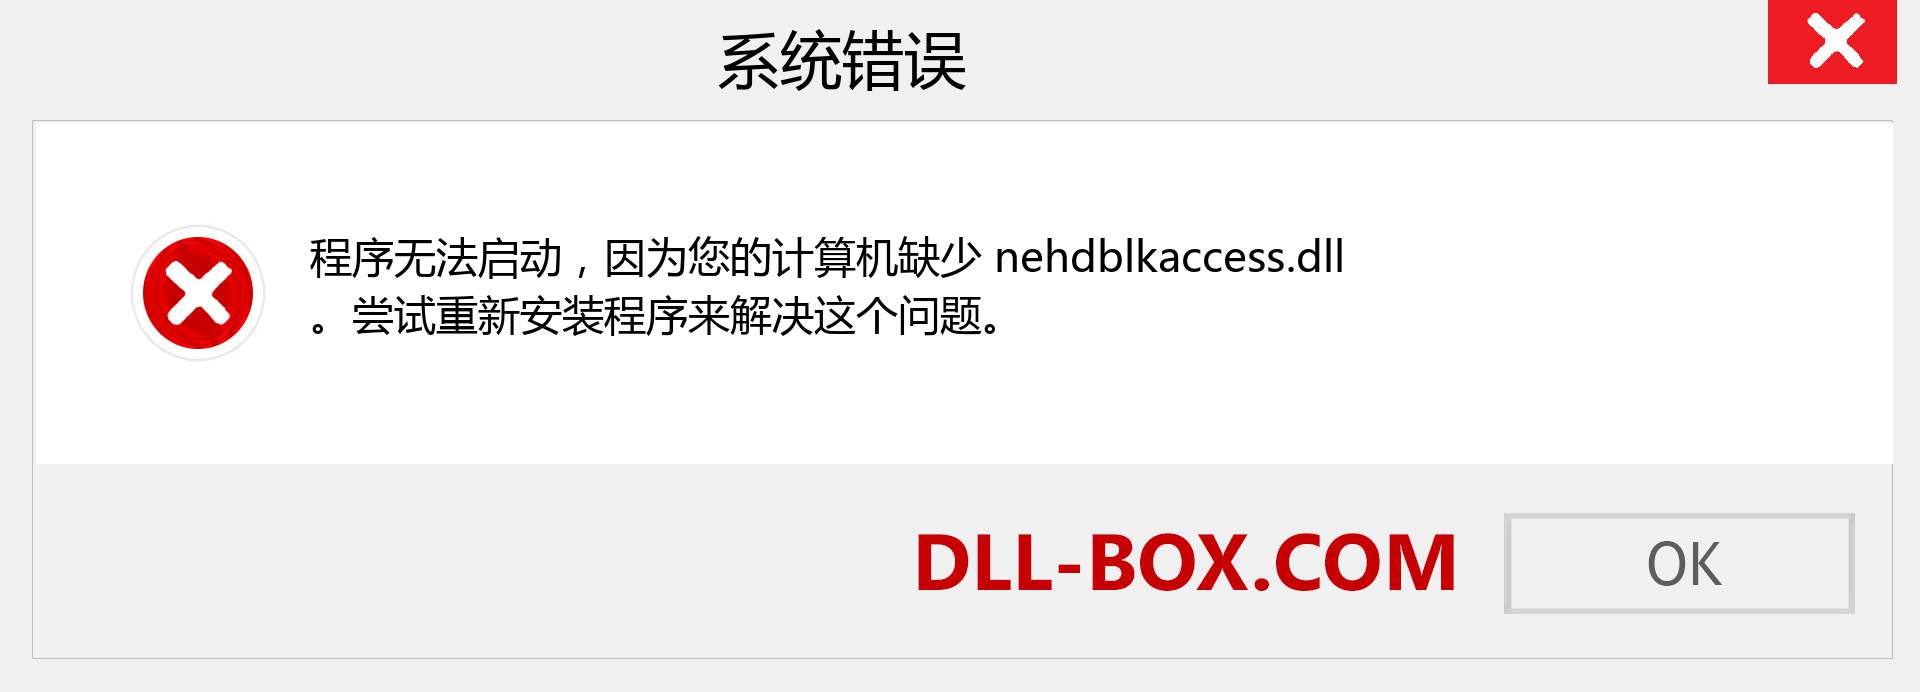 nehdblkaccess.dll 文件丢失？。 适用于 Windows 7、8、10 的下载 - 修复 Windows、照片、图像上的 nehdblkaccess dll 丢失错误